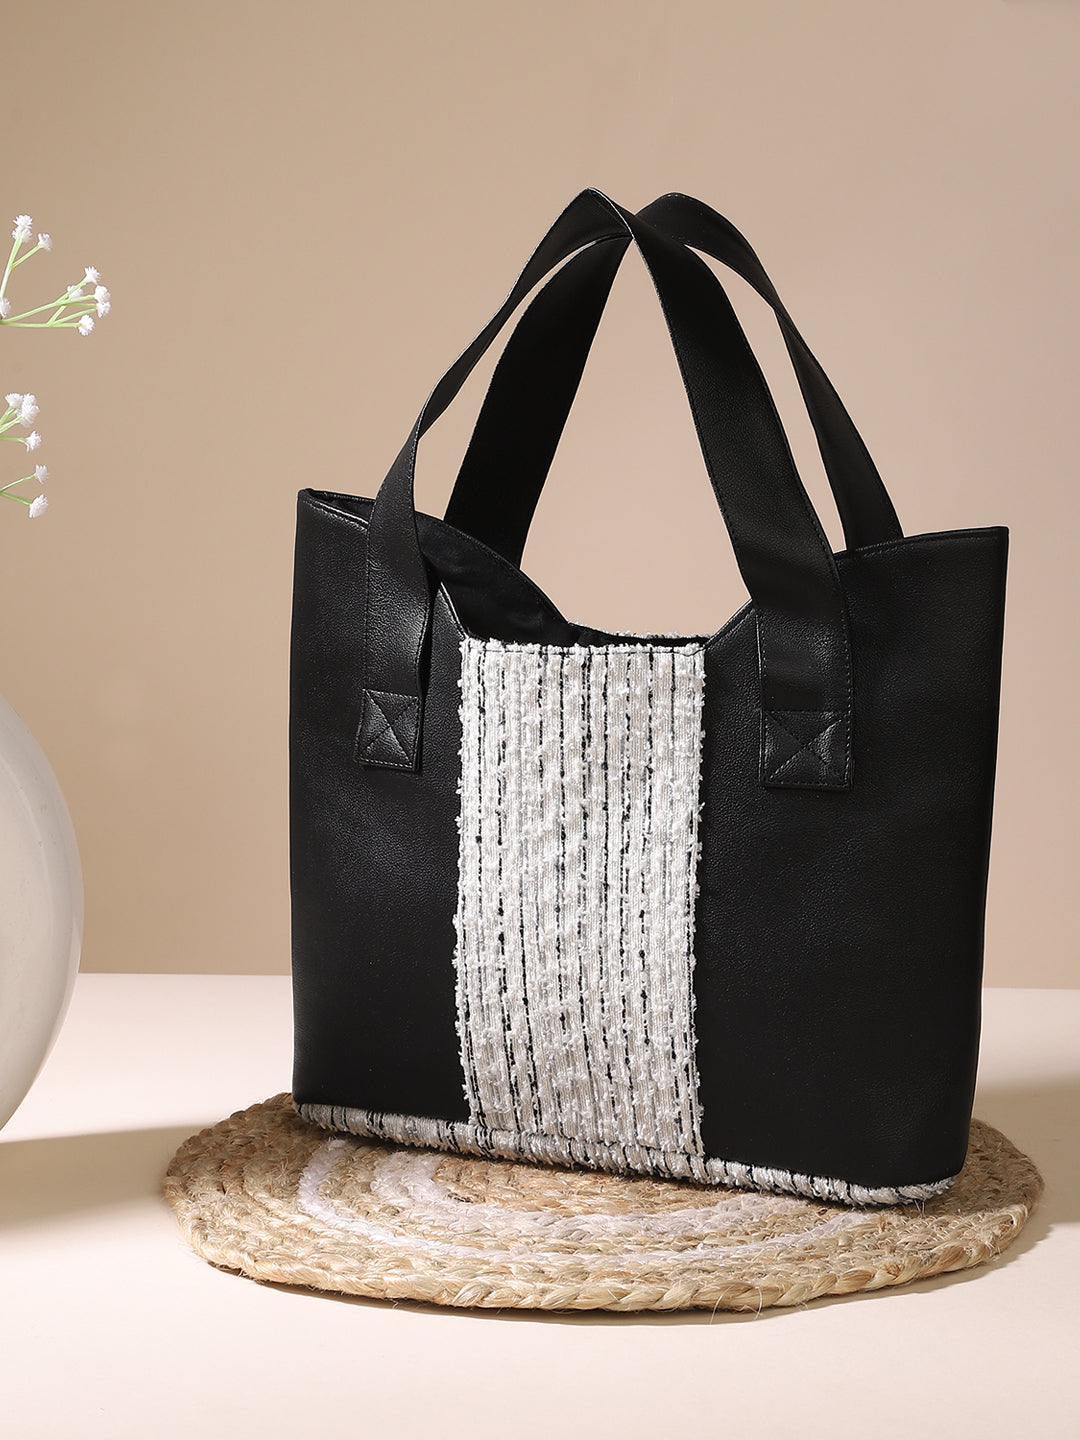 Black & White Handbag With Magnetic Closure